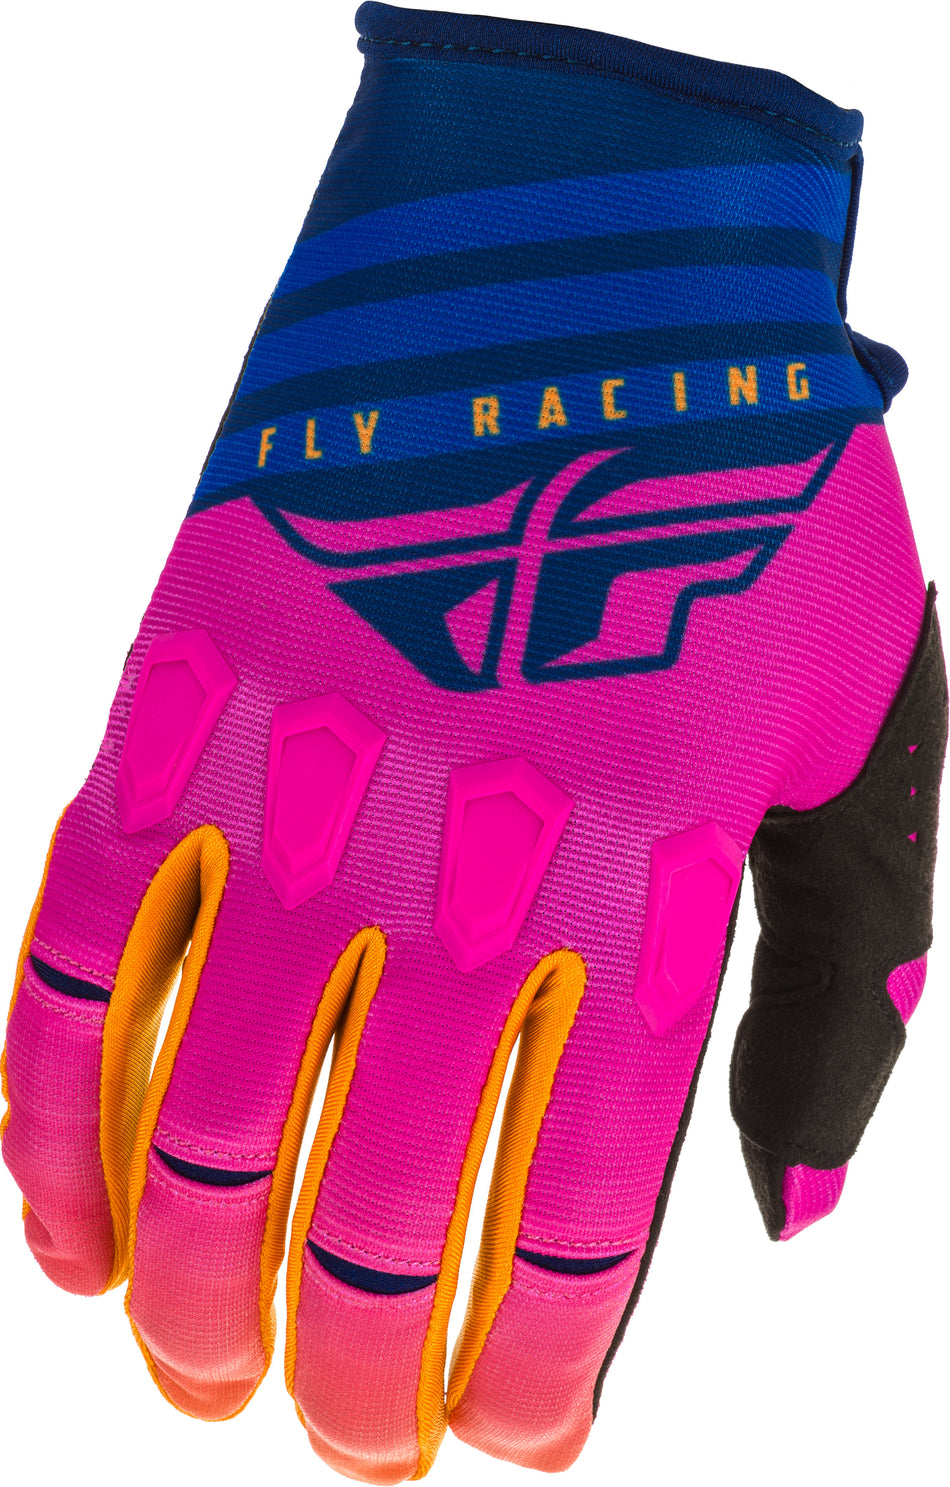 FLY RACING Kinetic K220 Gloves Midnight/Blue/Orange Sz 06 373-51906